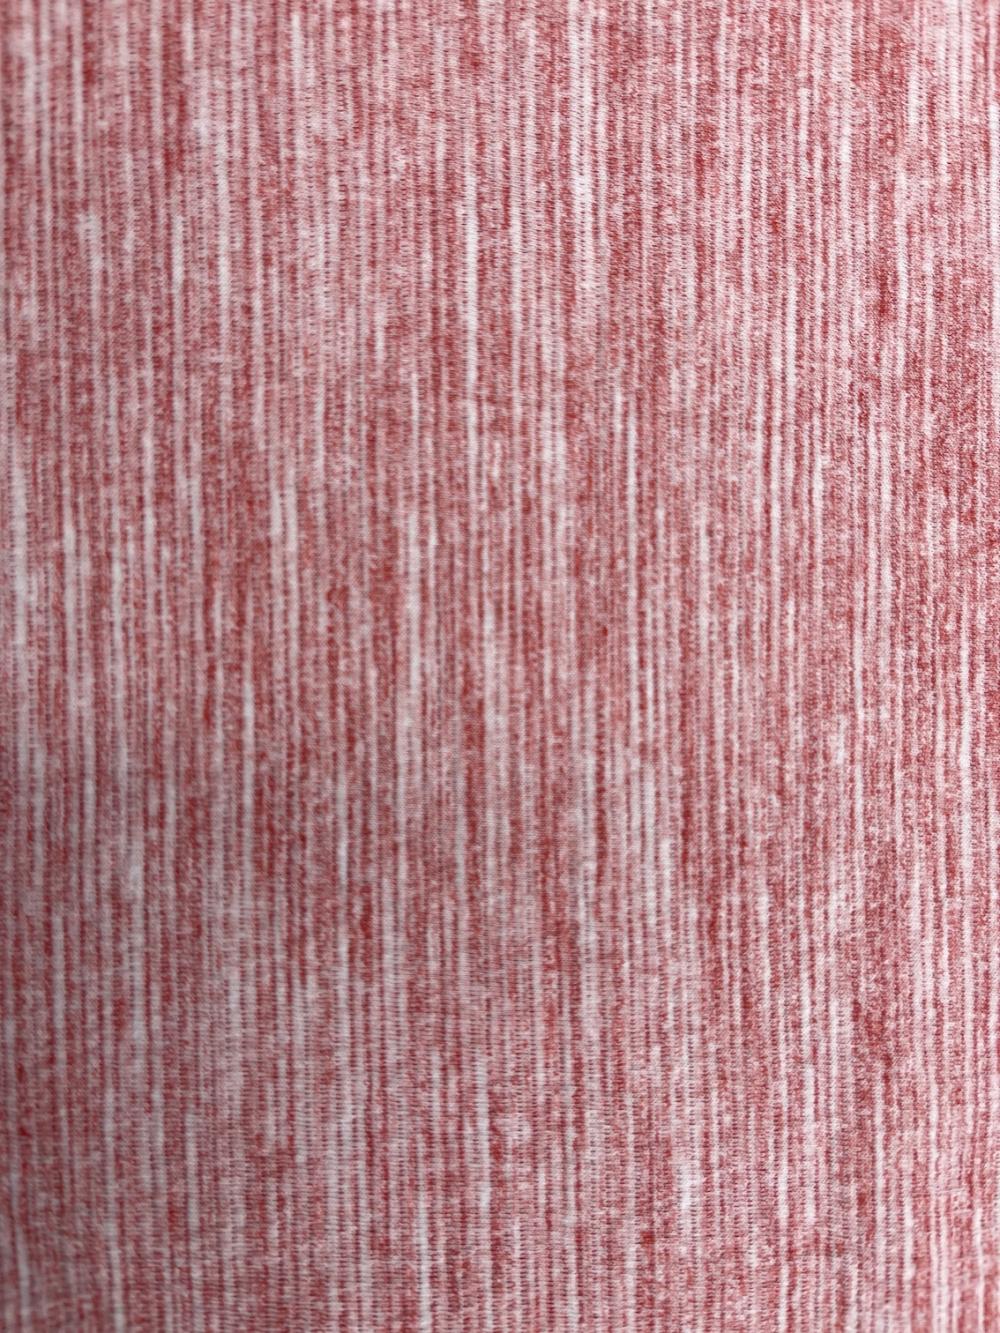 56% Baumwolle 42% Polyester 2% Spandex Texture Fabrics